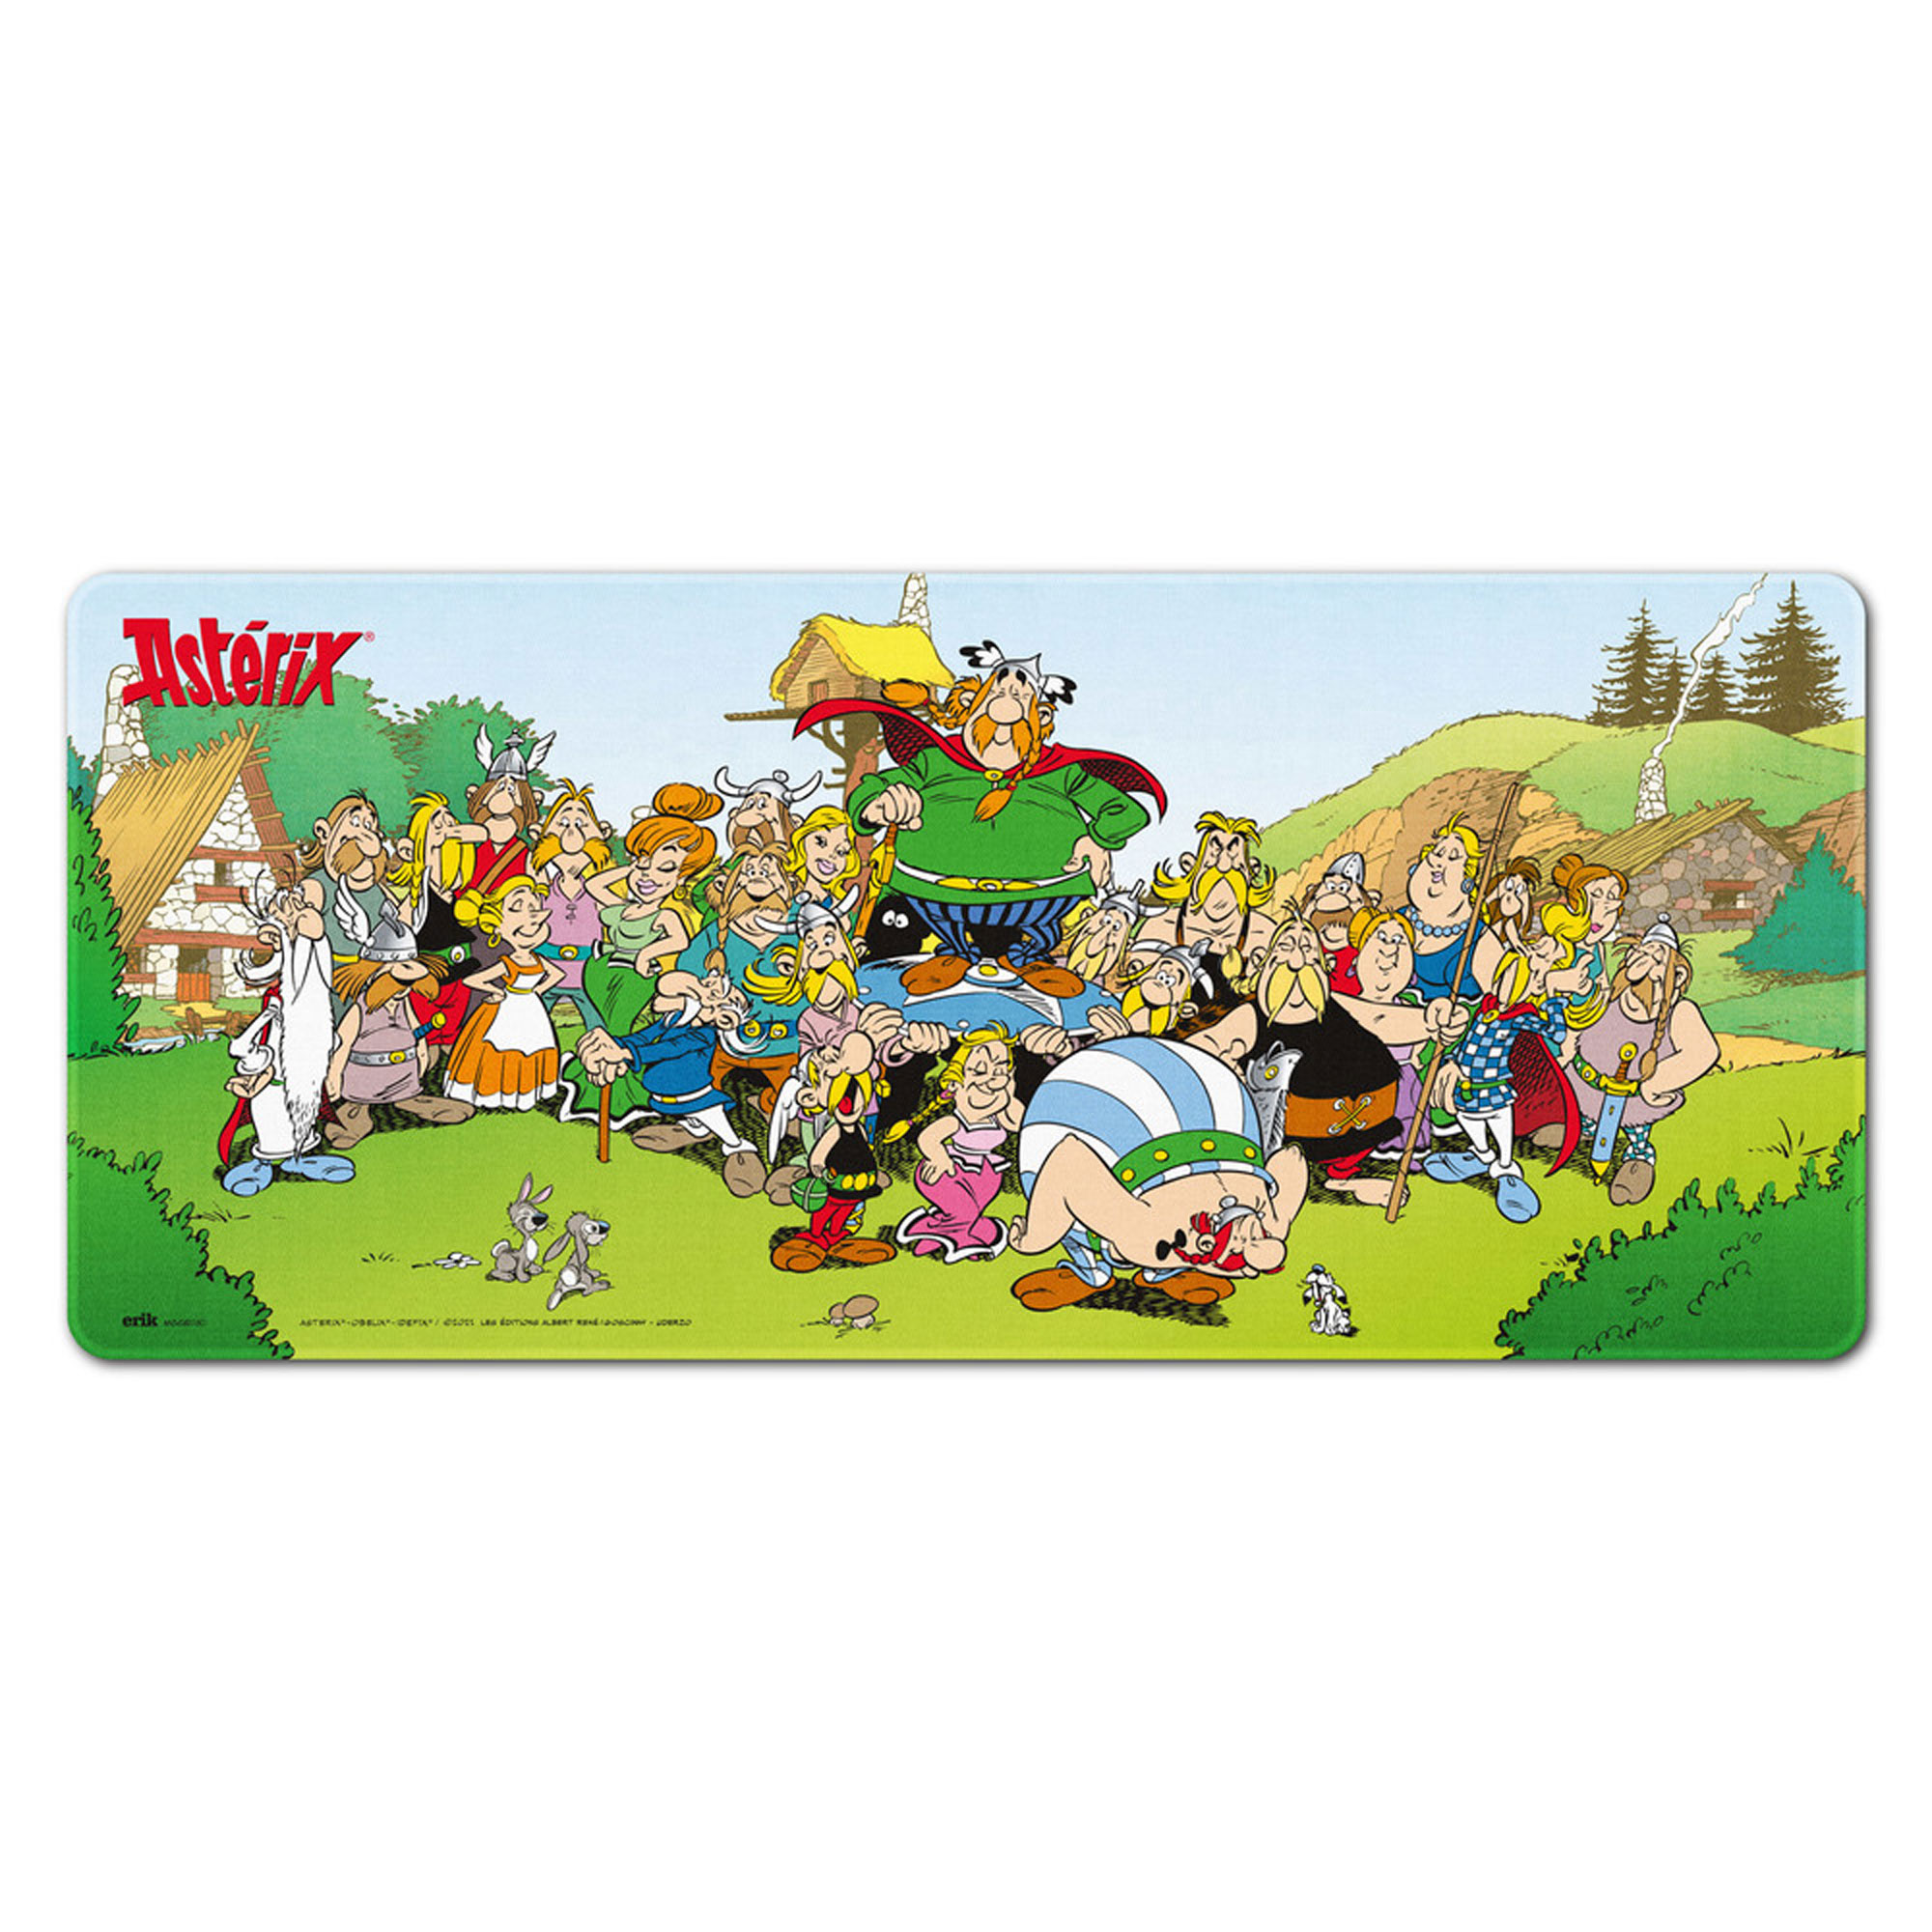 Asterix & Obelix Mousepad - Gaming